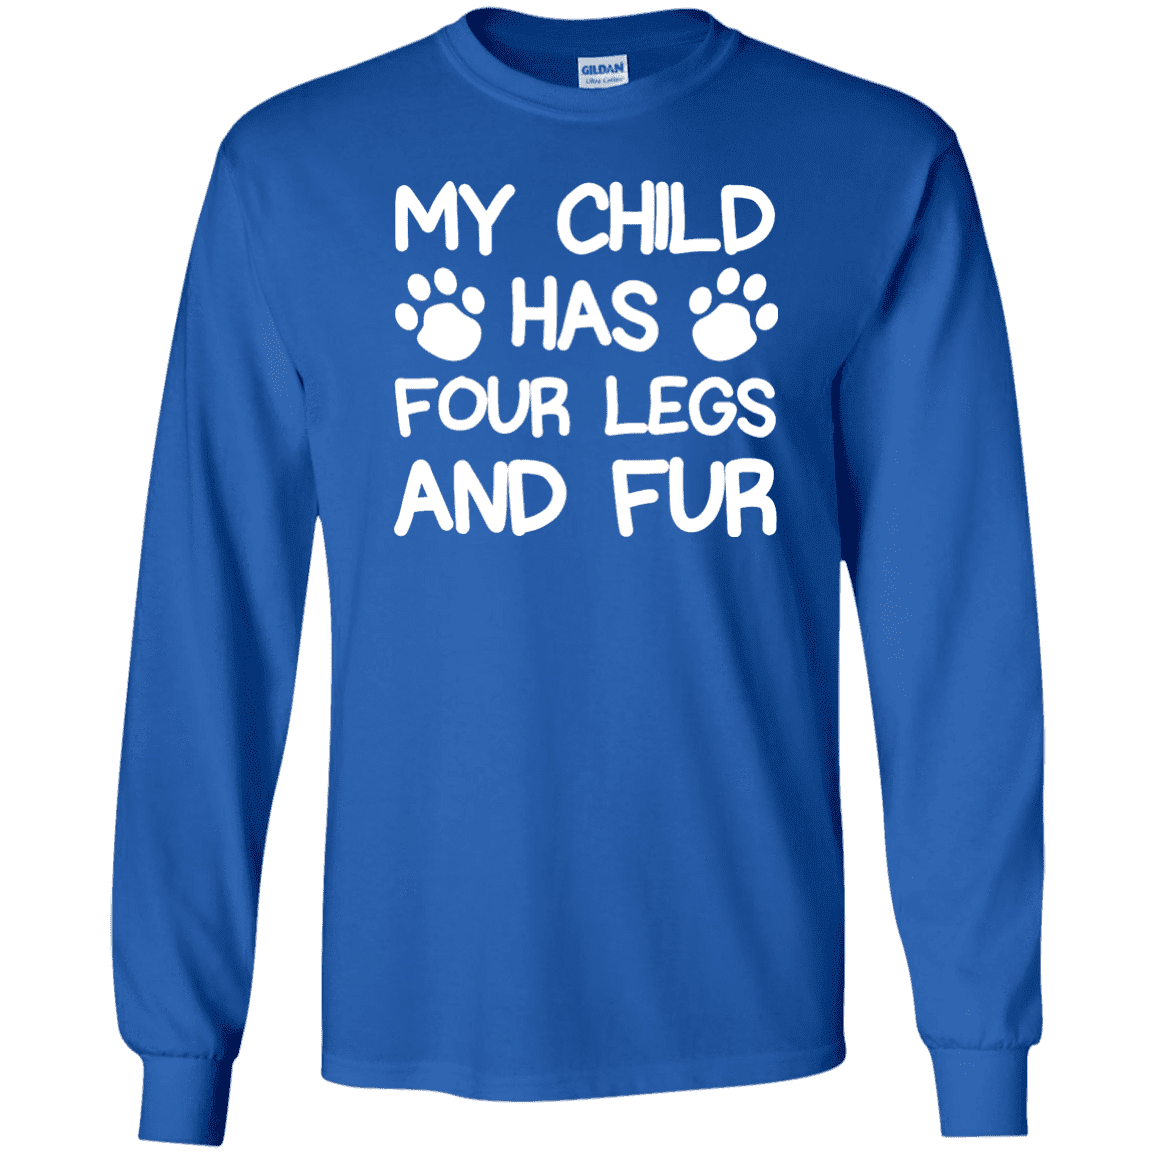 Four Legs And Fur - Long Sleeve T Shirt.